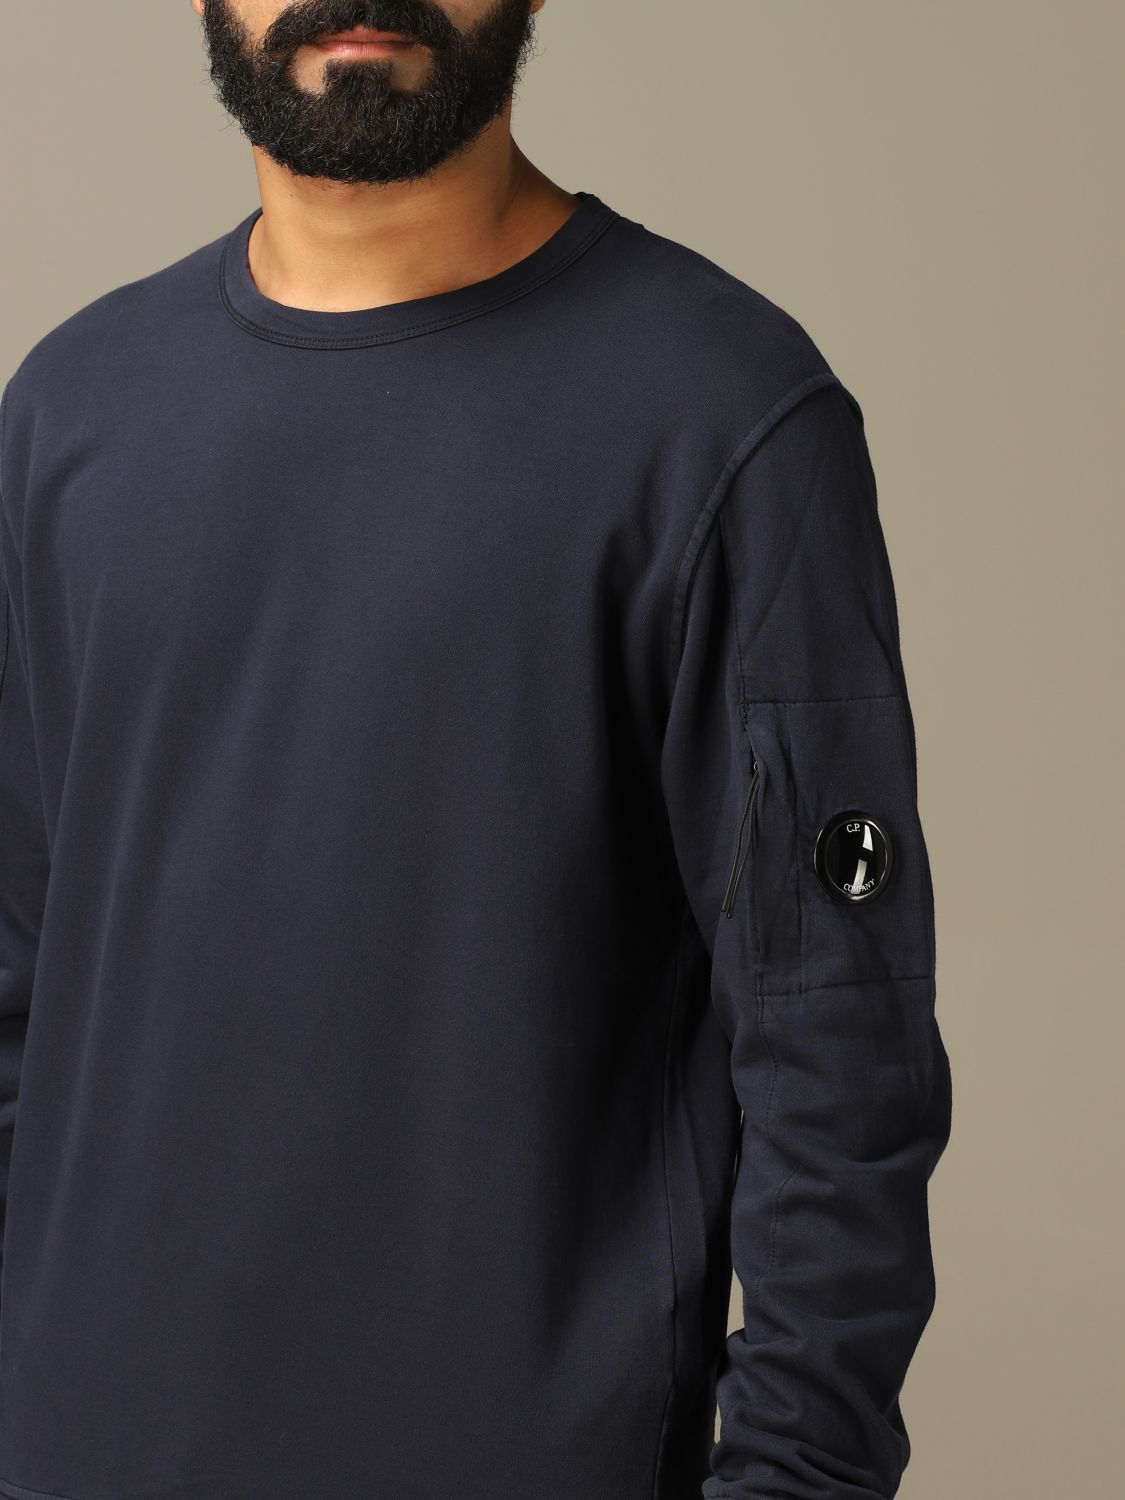 C.p. Company Outlet: sweatshirt for men - Navy | C.p. Company ...